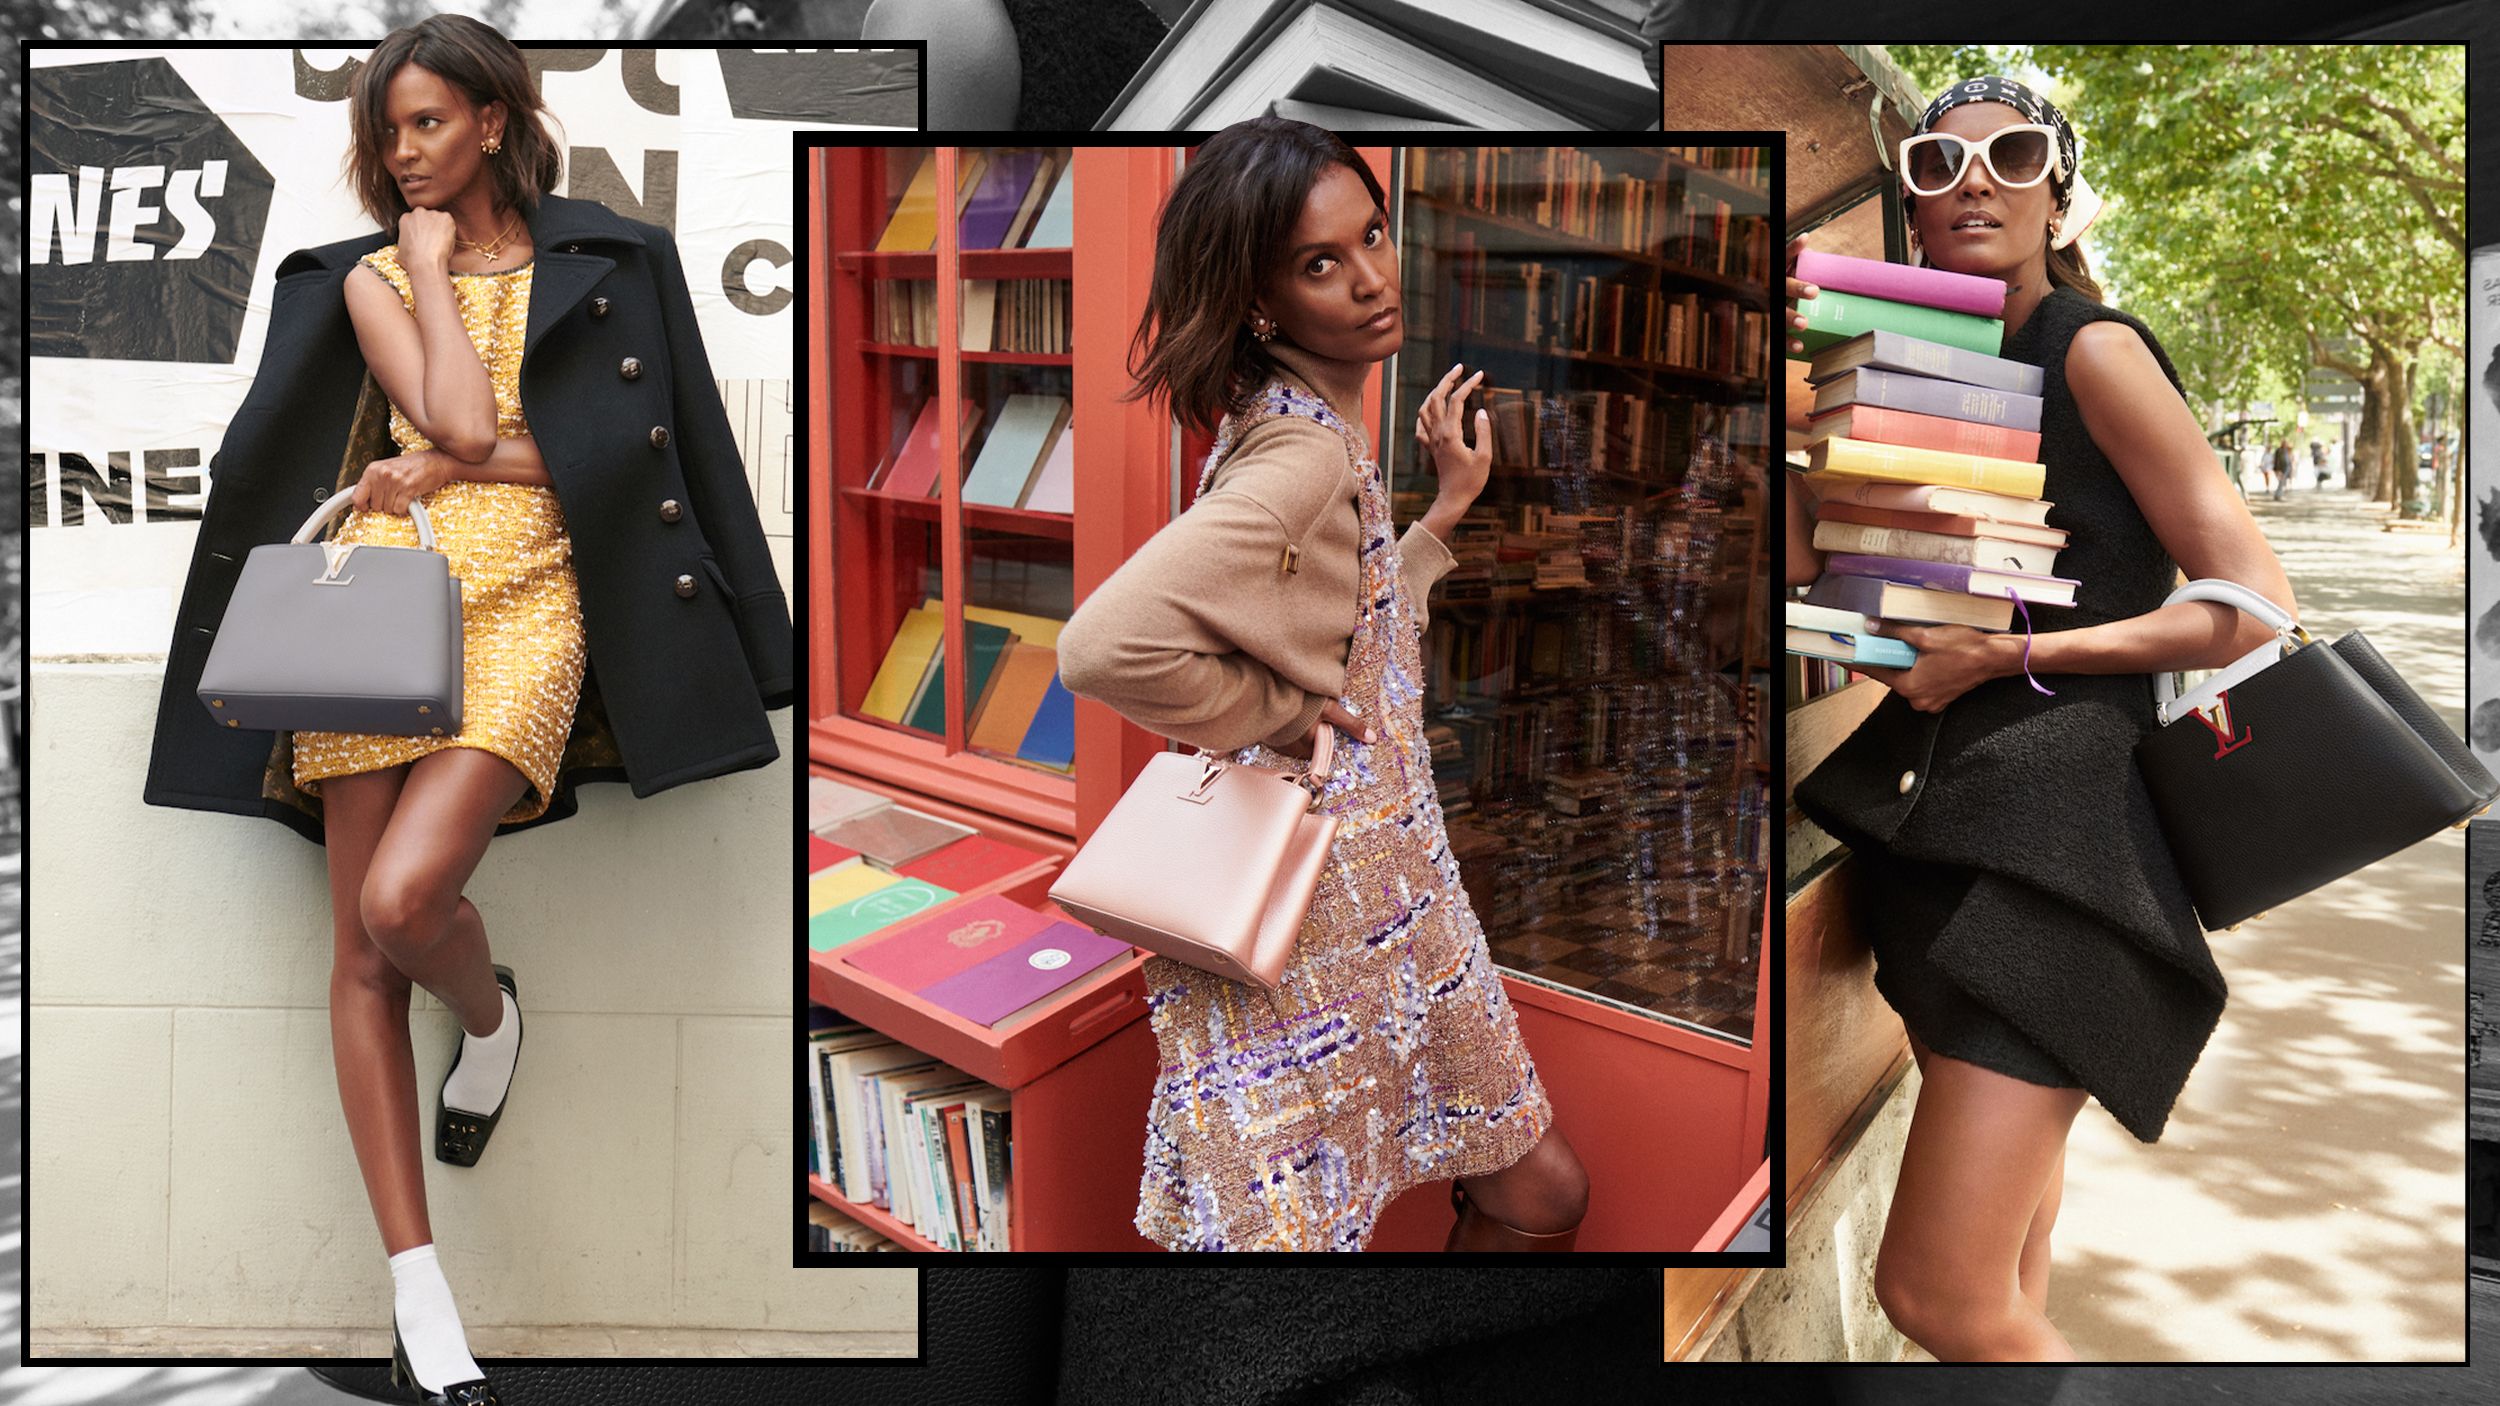 Moda en libros: los bolsos Louis Vuitton